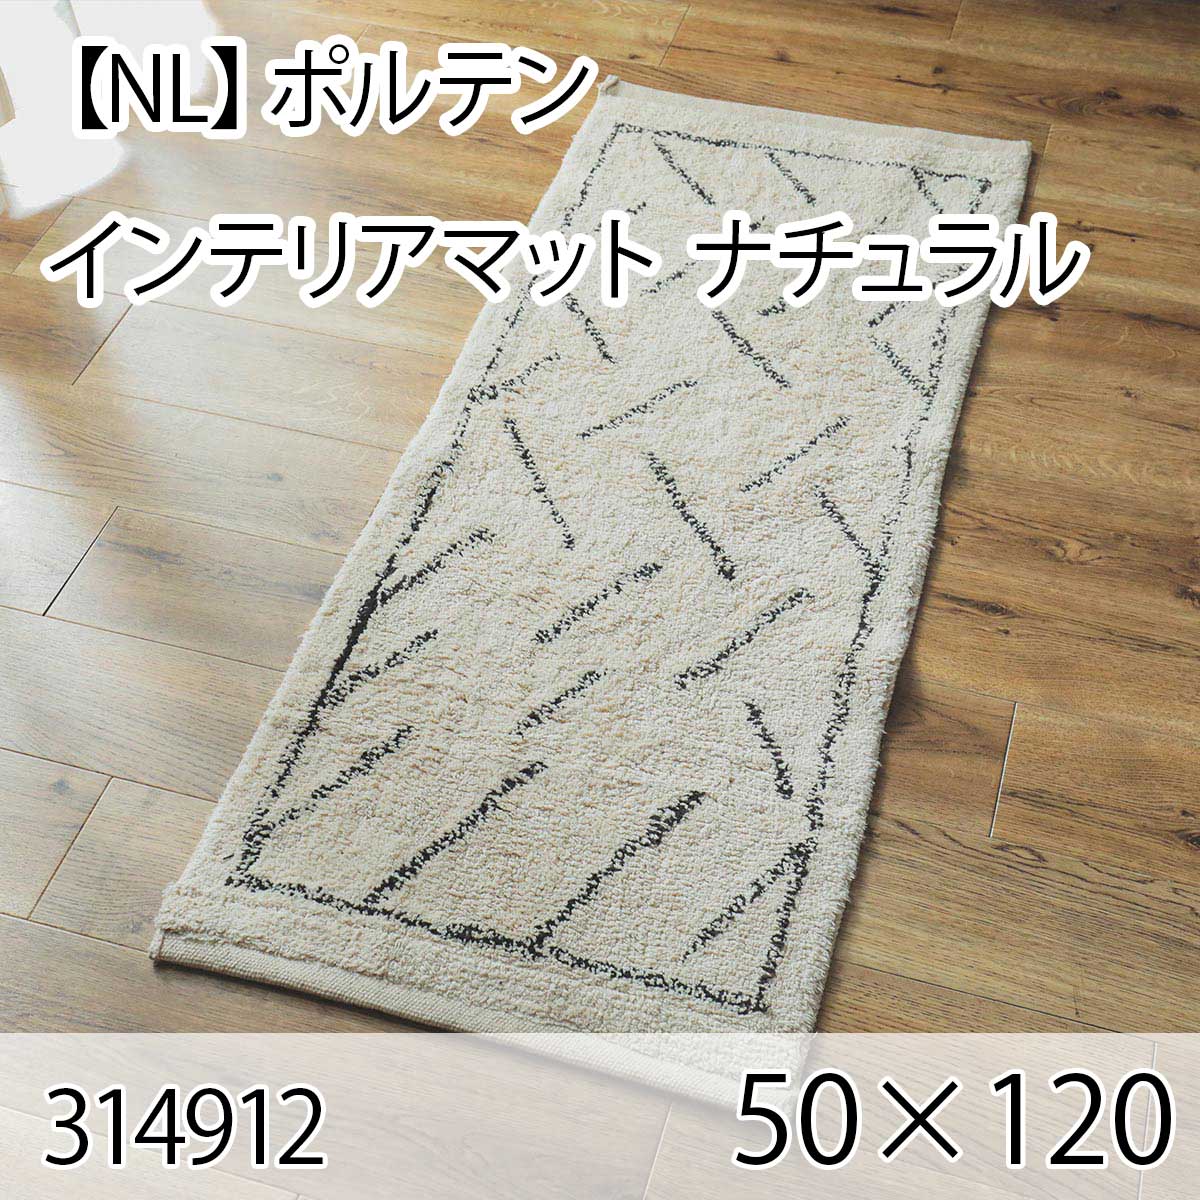 【NL】ポルテン インテリアマット 50cmx120cm ナチュラル